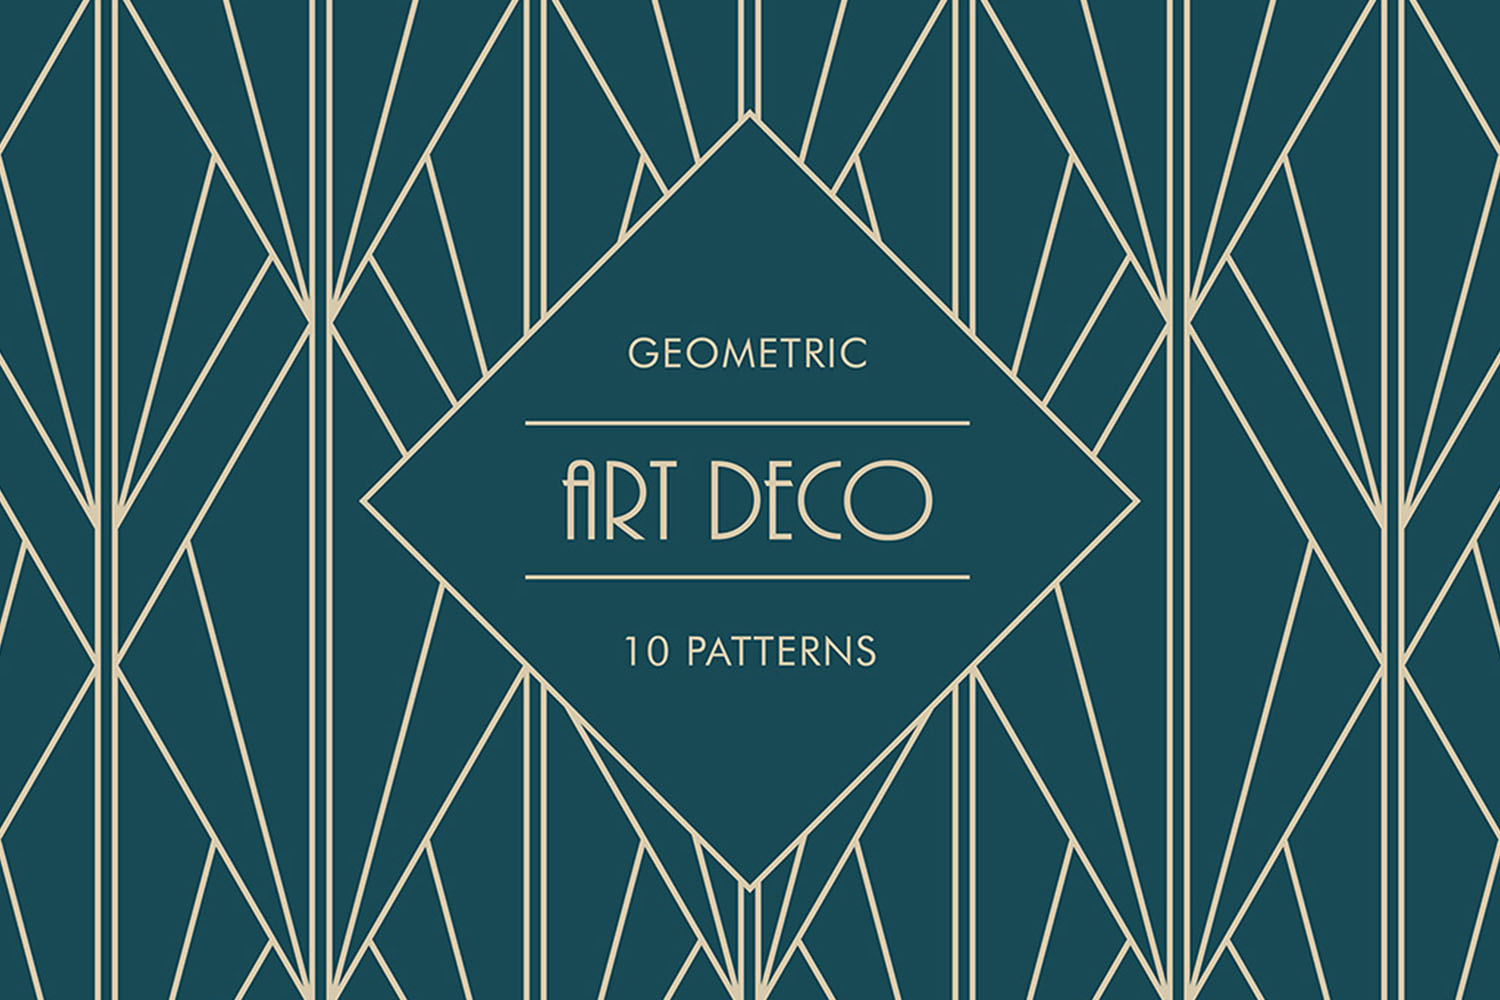 Art Deco Geometric Patterns Download